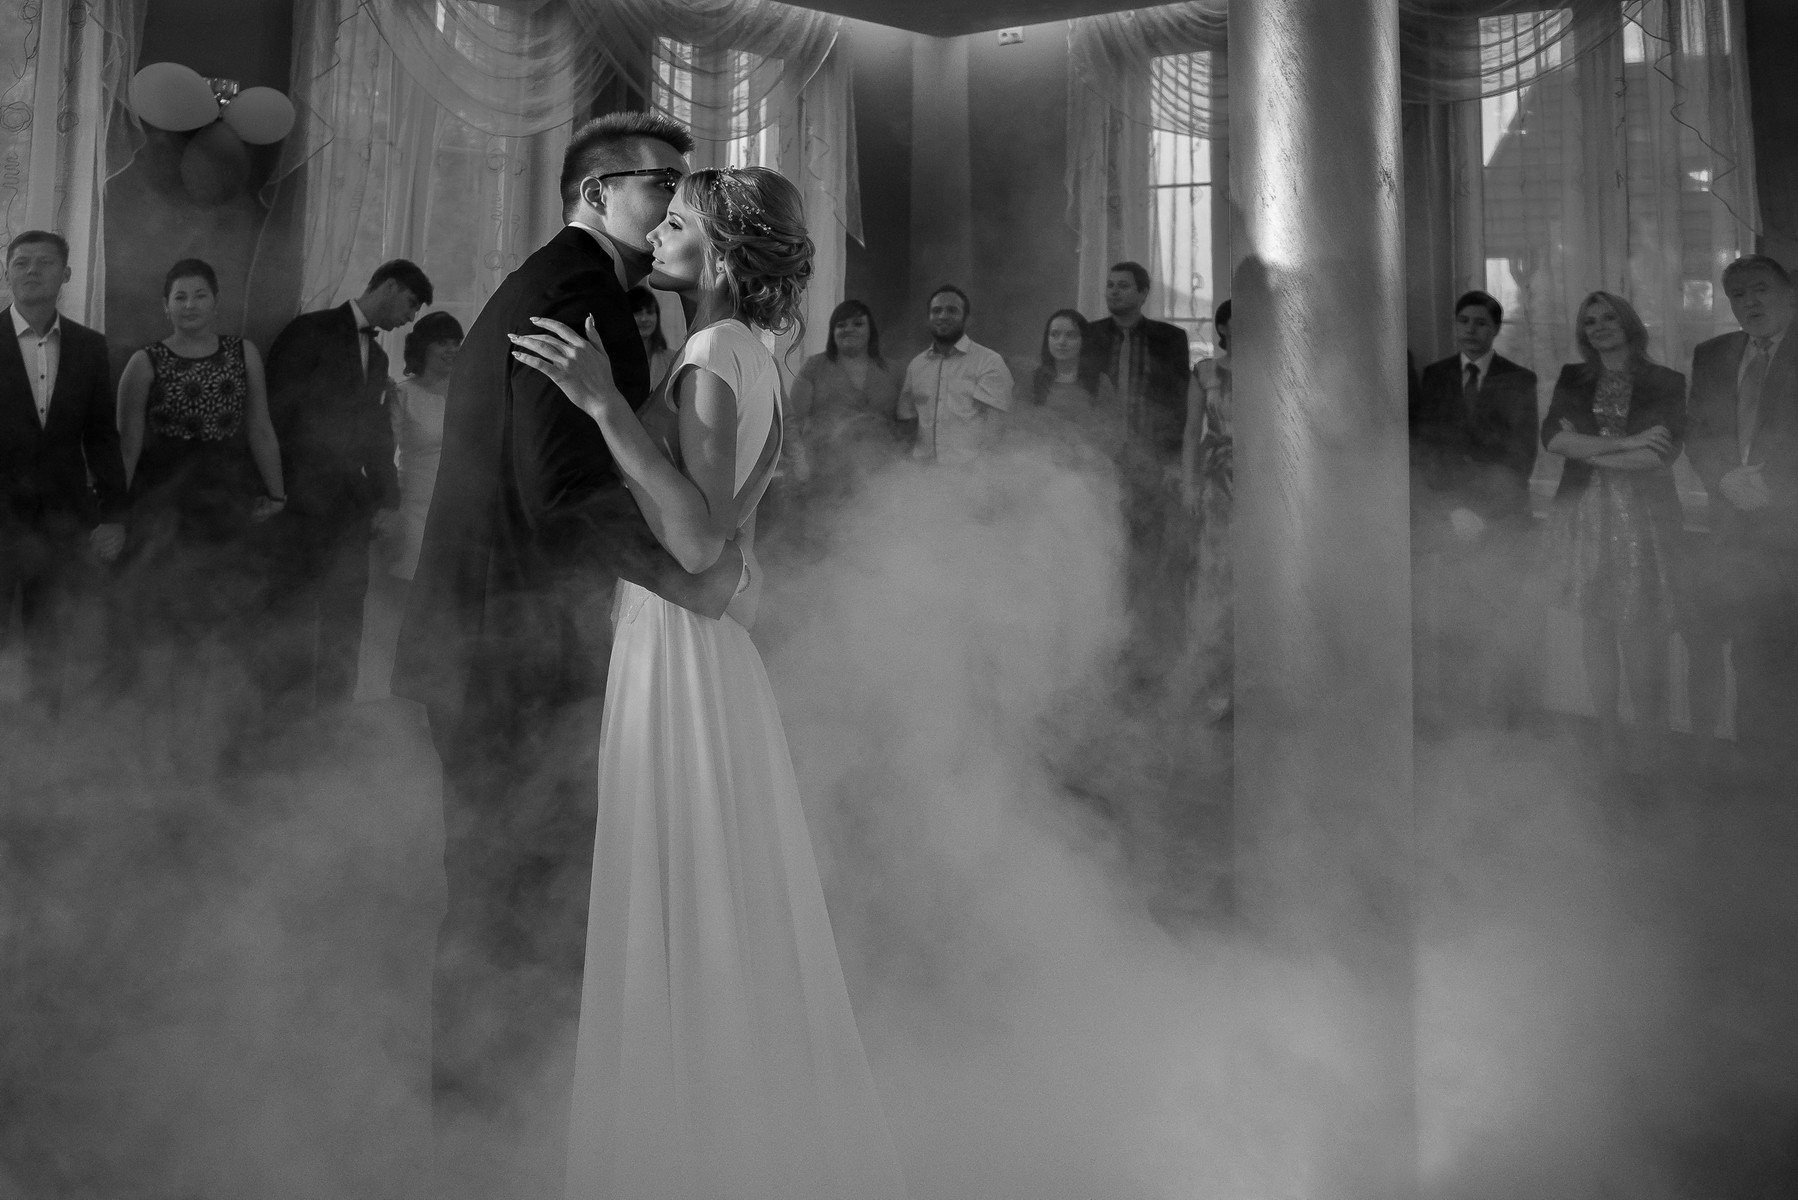 fotograf kielce przemek-sekowski-fotografia portfolio zdjecia slubne inspiracje wesele plener slubny sesja slubna